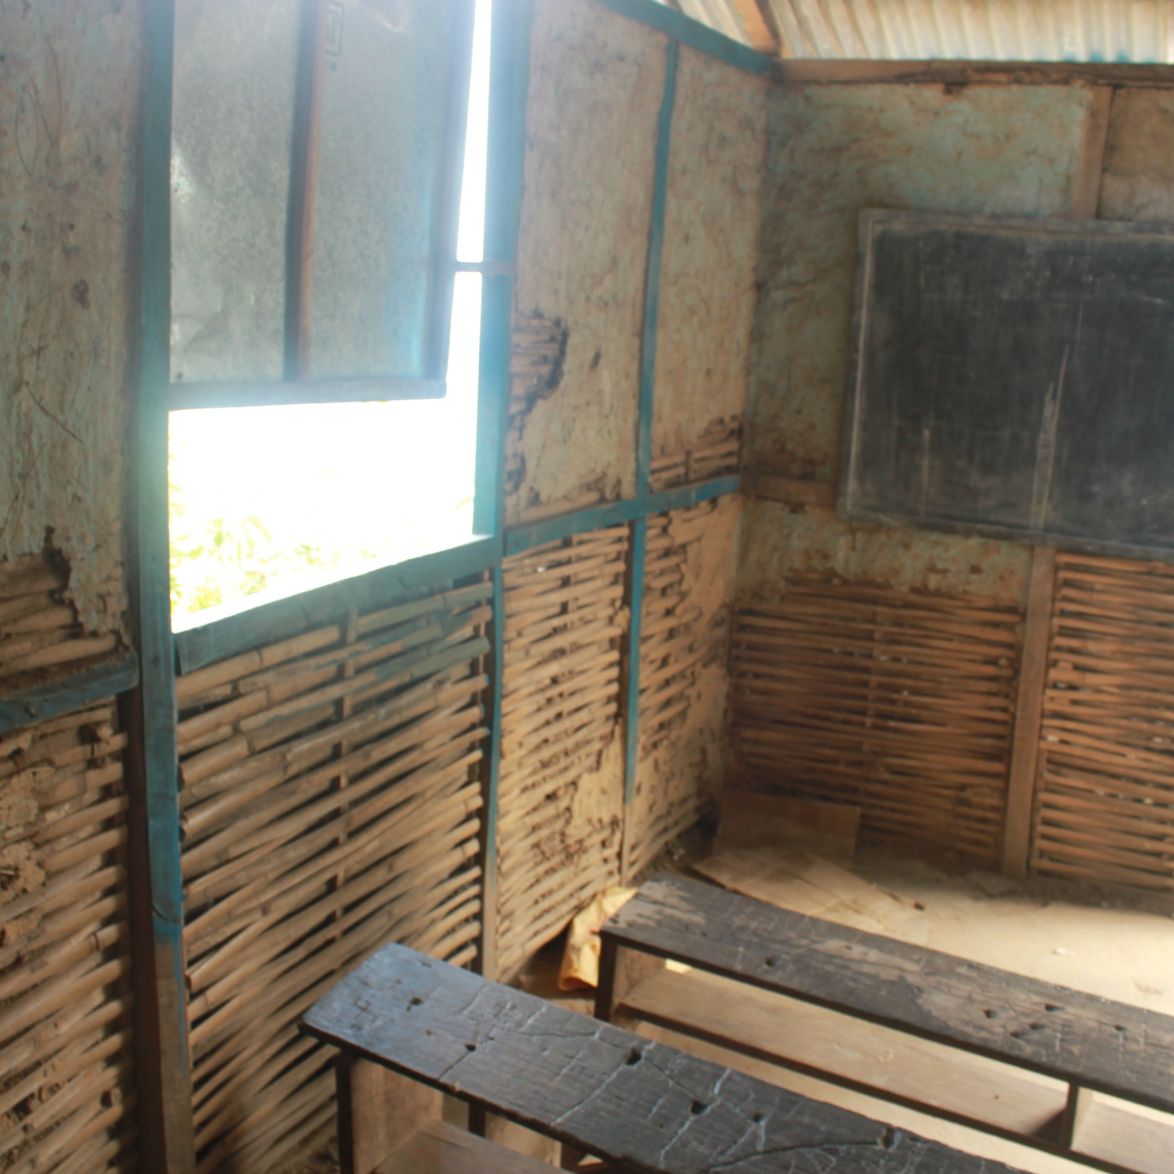 Construct 3 new classrooms for Shera Nazi School